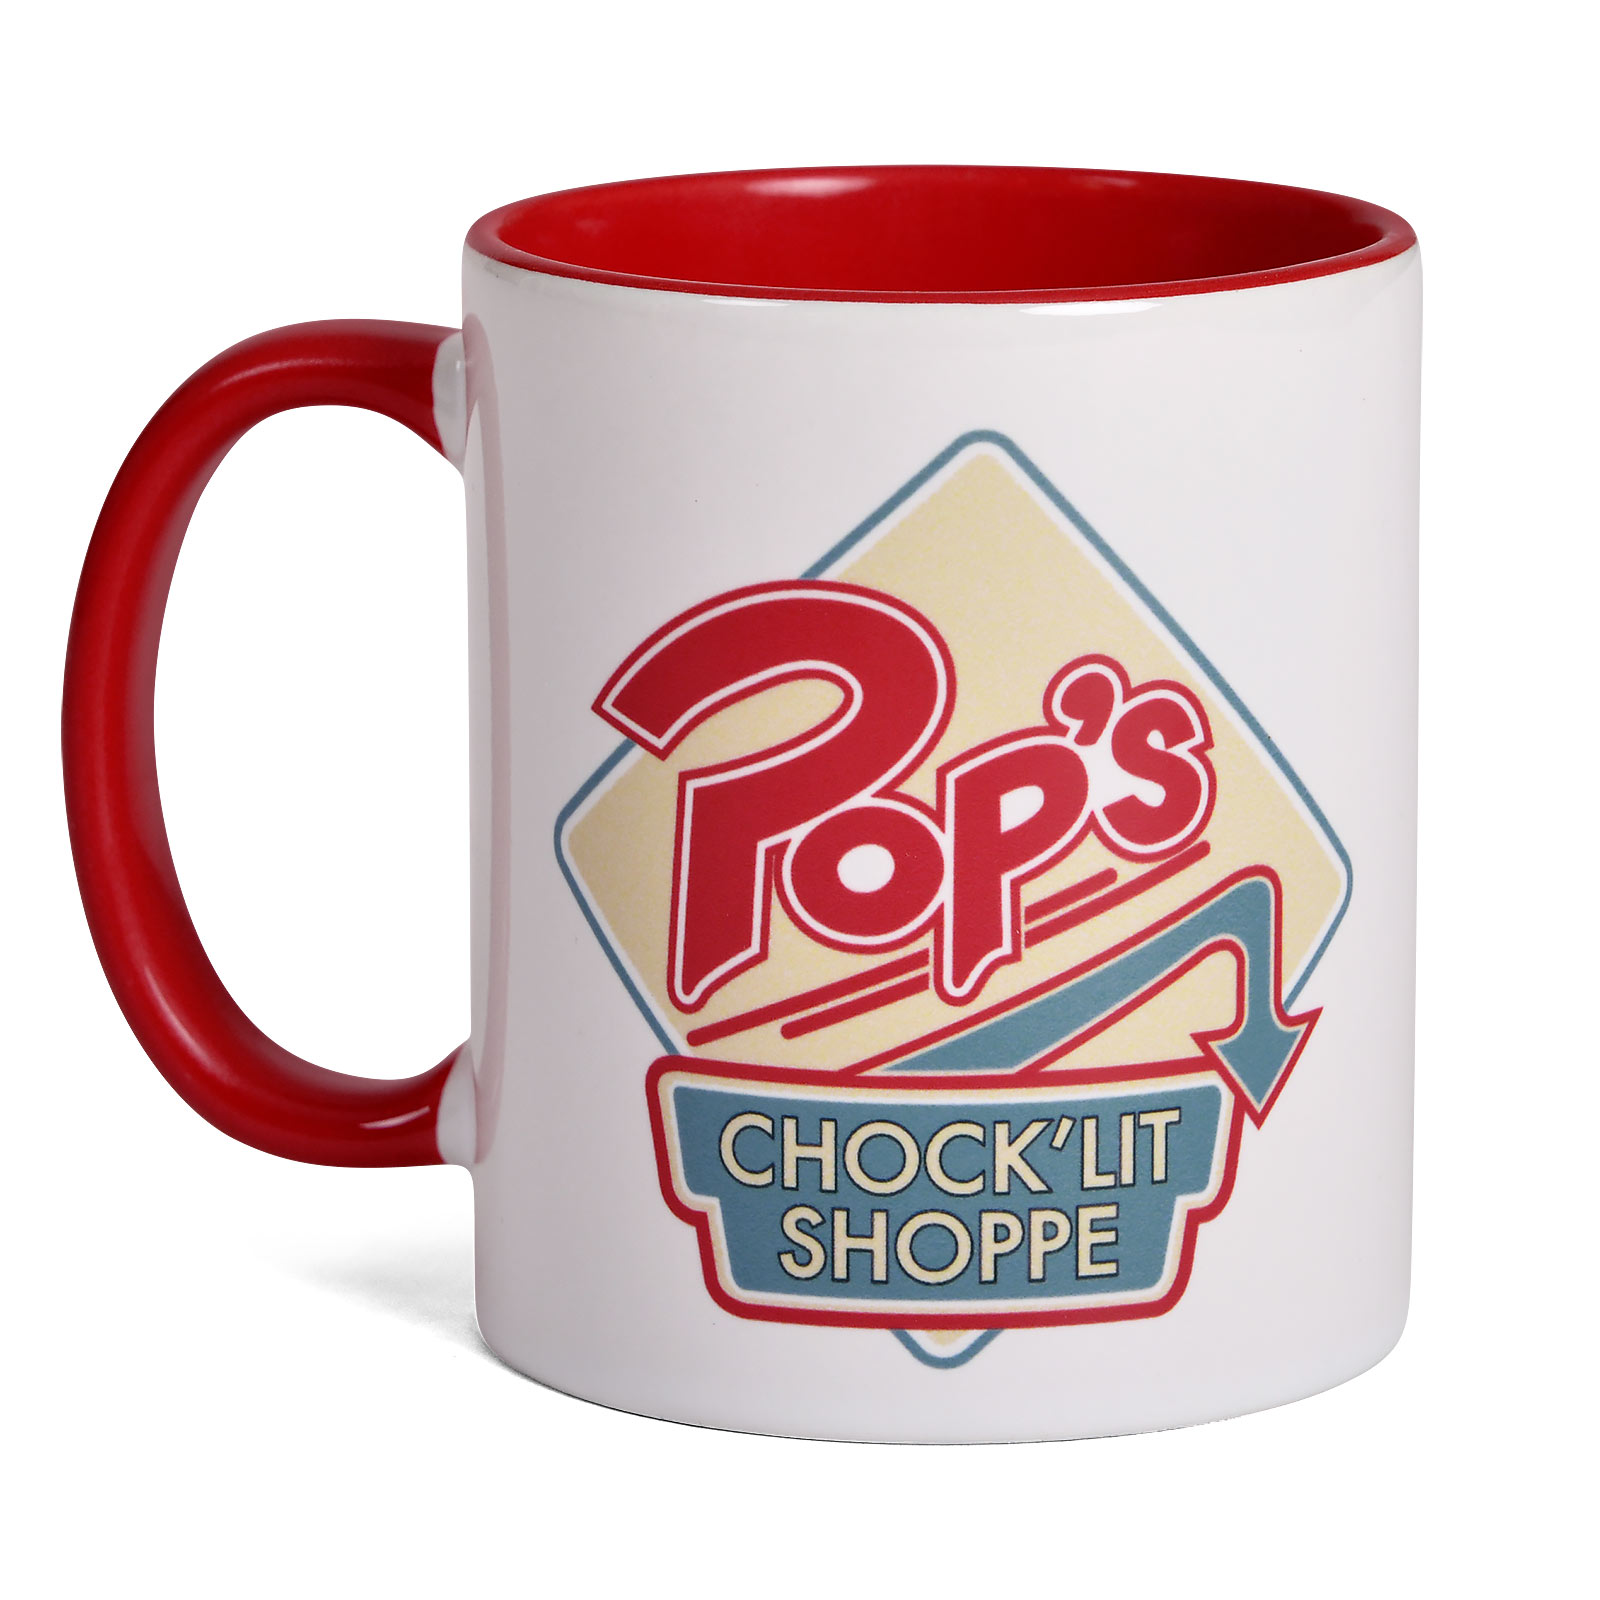 Riverdale - Tasse Pop's Chock'lit Shoppe